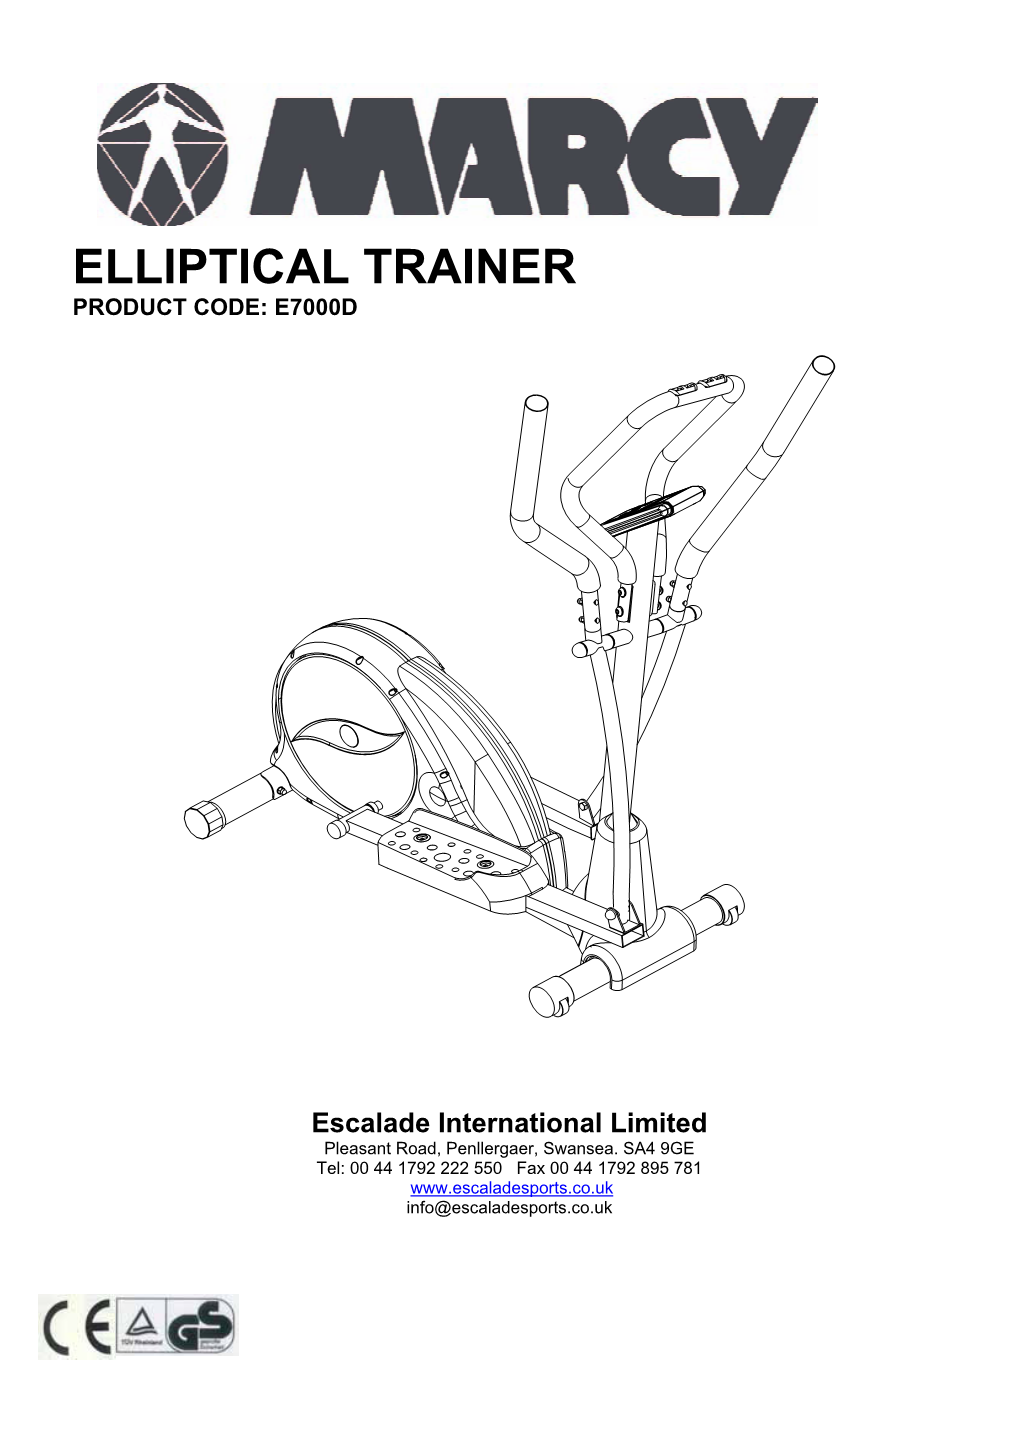 Elliptical Trainer Product Code: E7000d